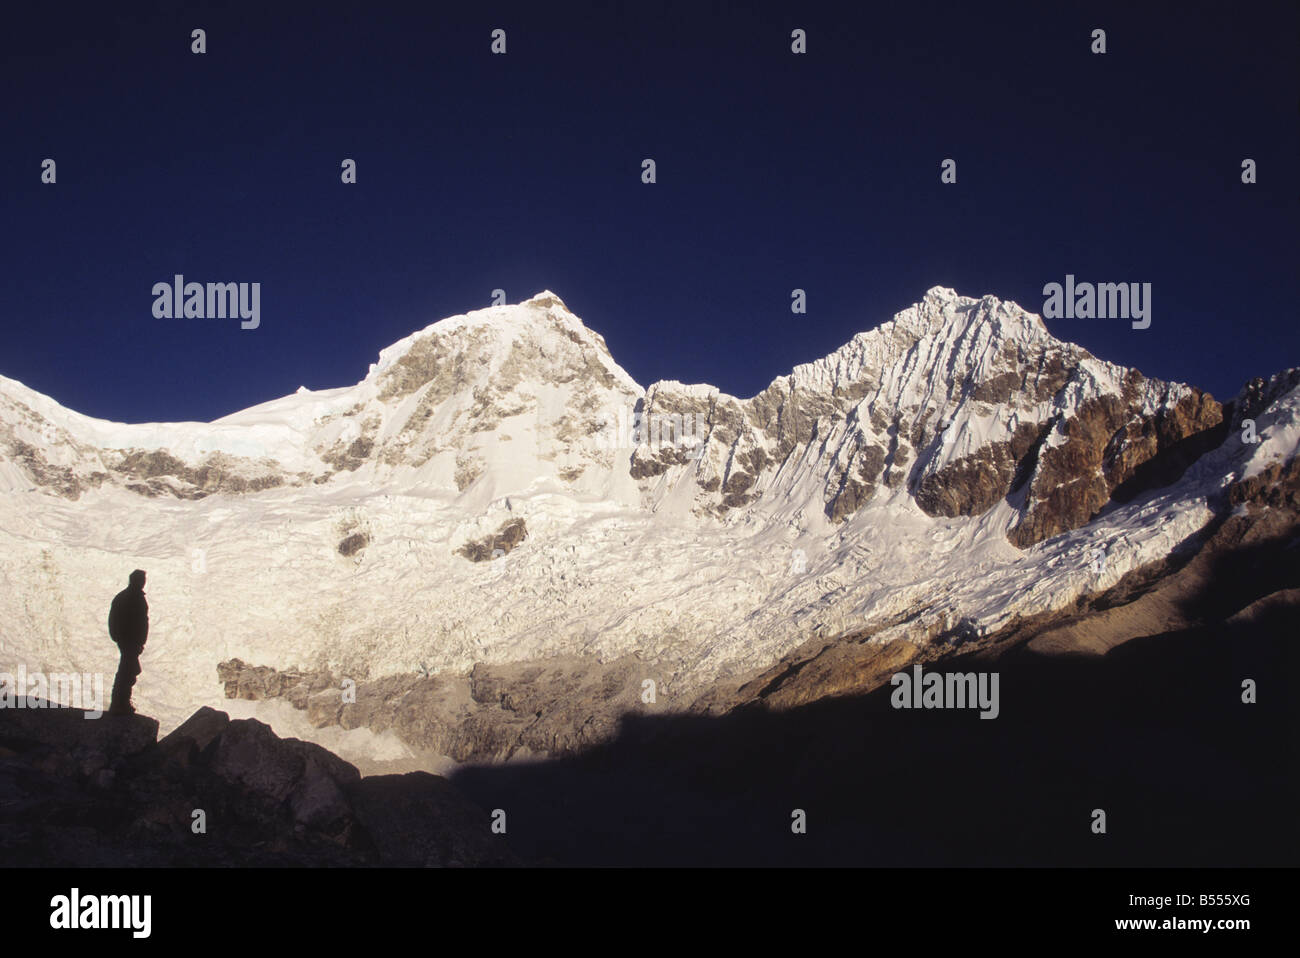 Trekker silhouetted below Mt Huandoy (L to R: East and North Peaks) looking at view, Cordillera Blanca, Peru Stock Photo